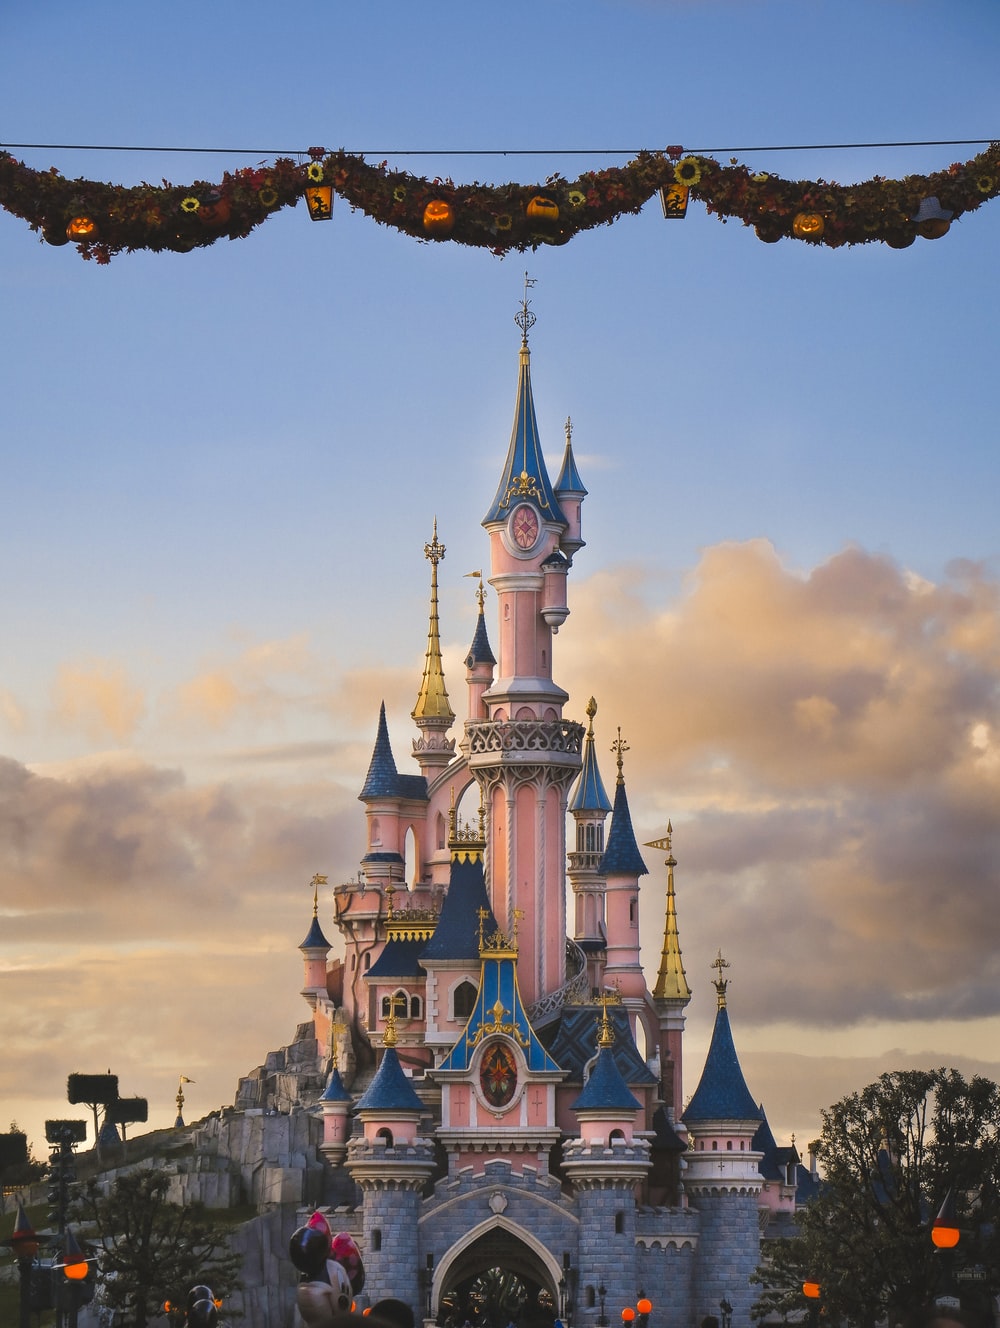 Disneyland Picture. Download Free Image